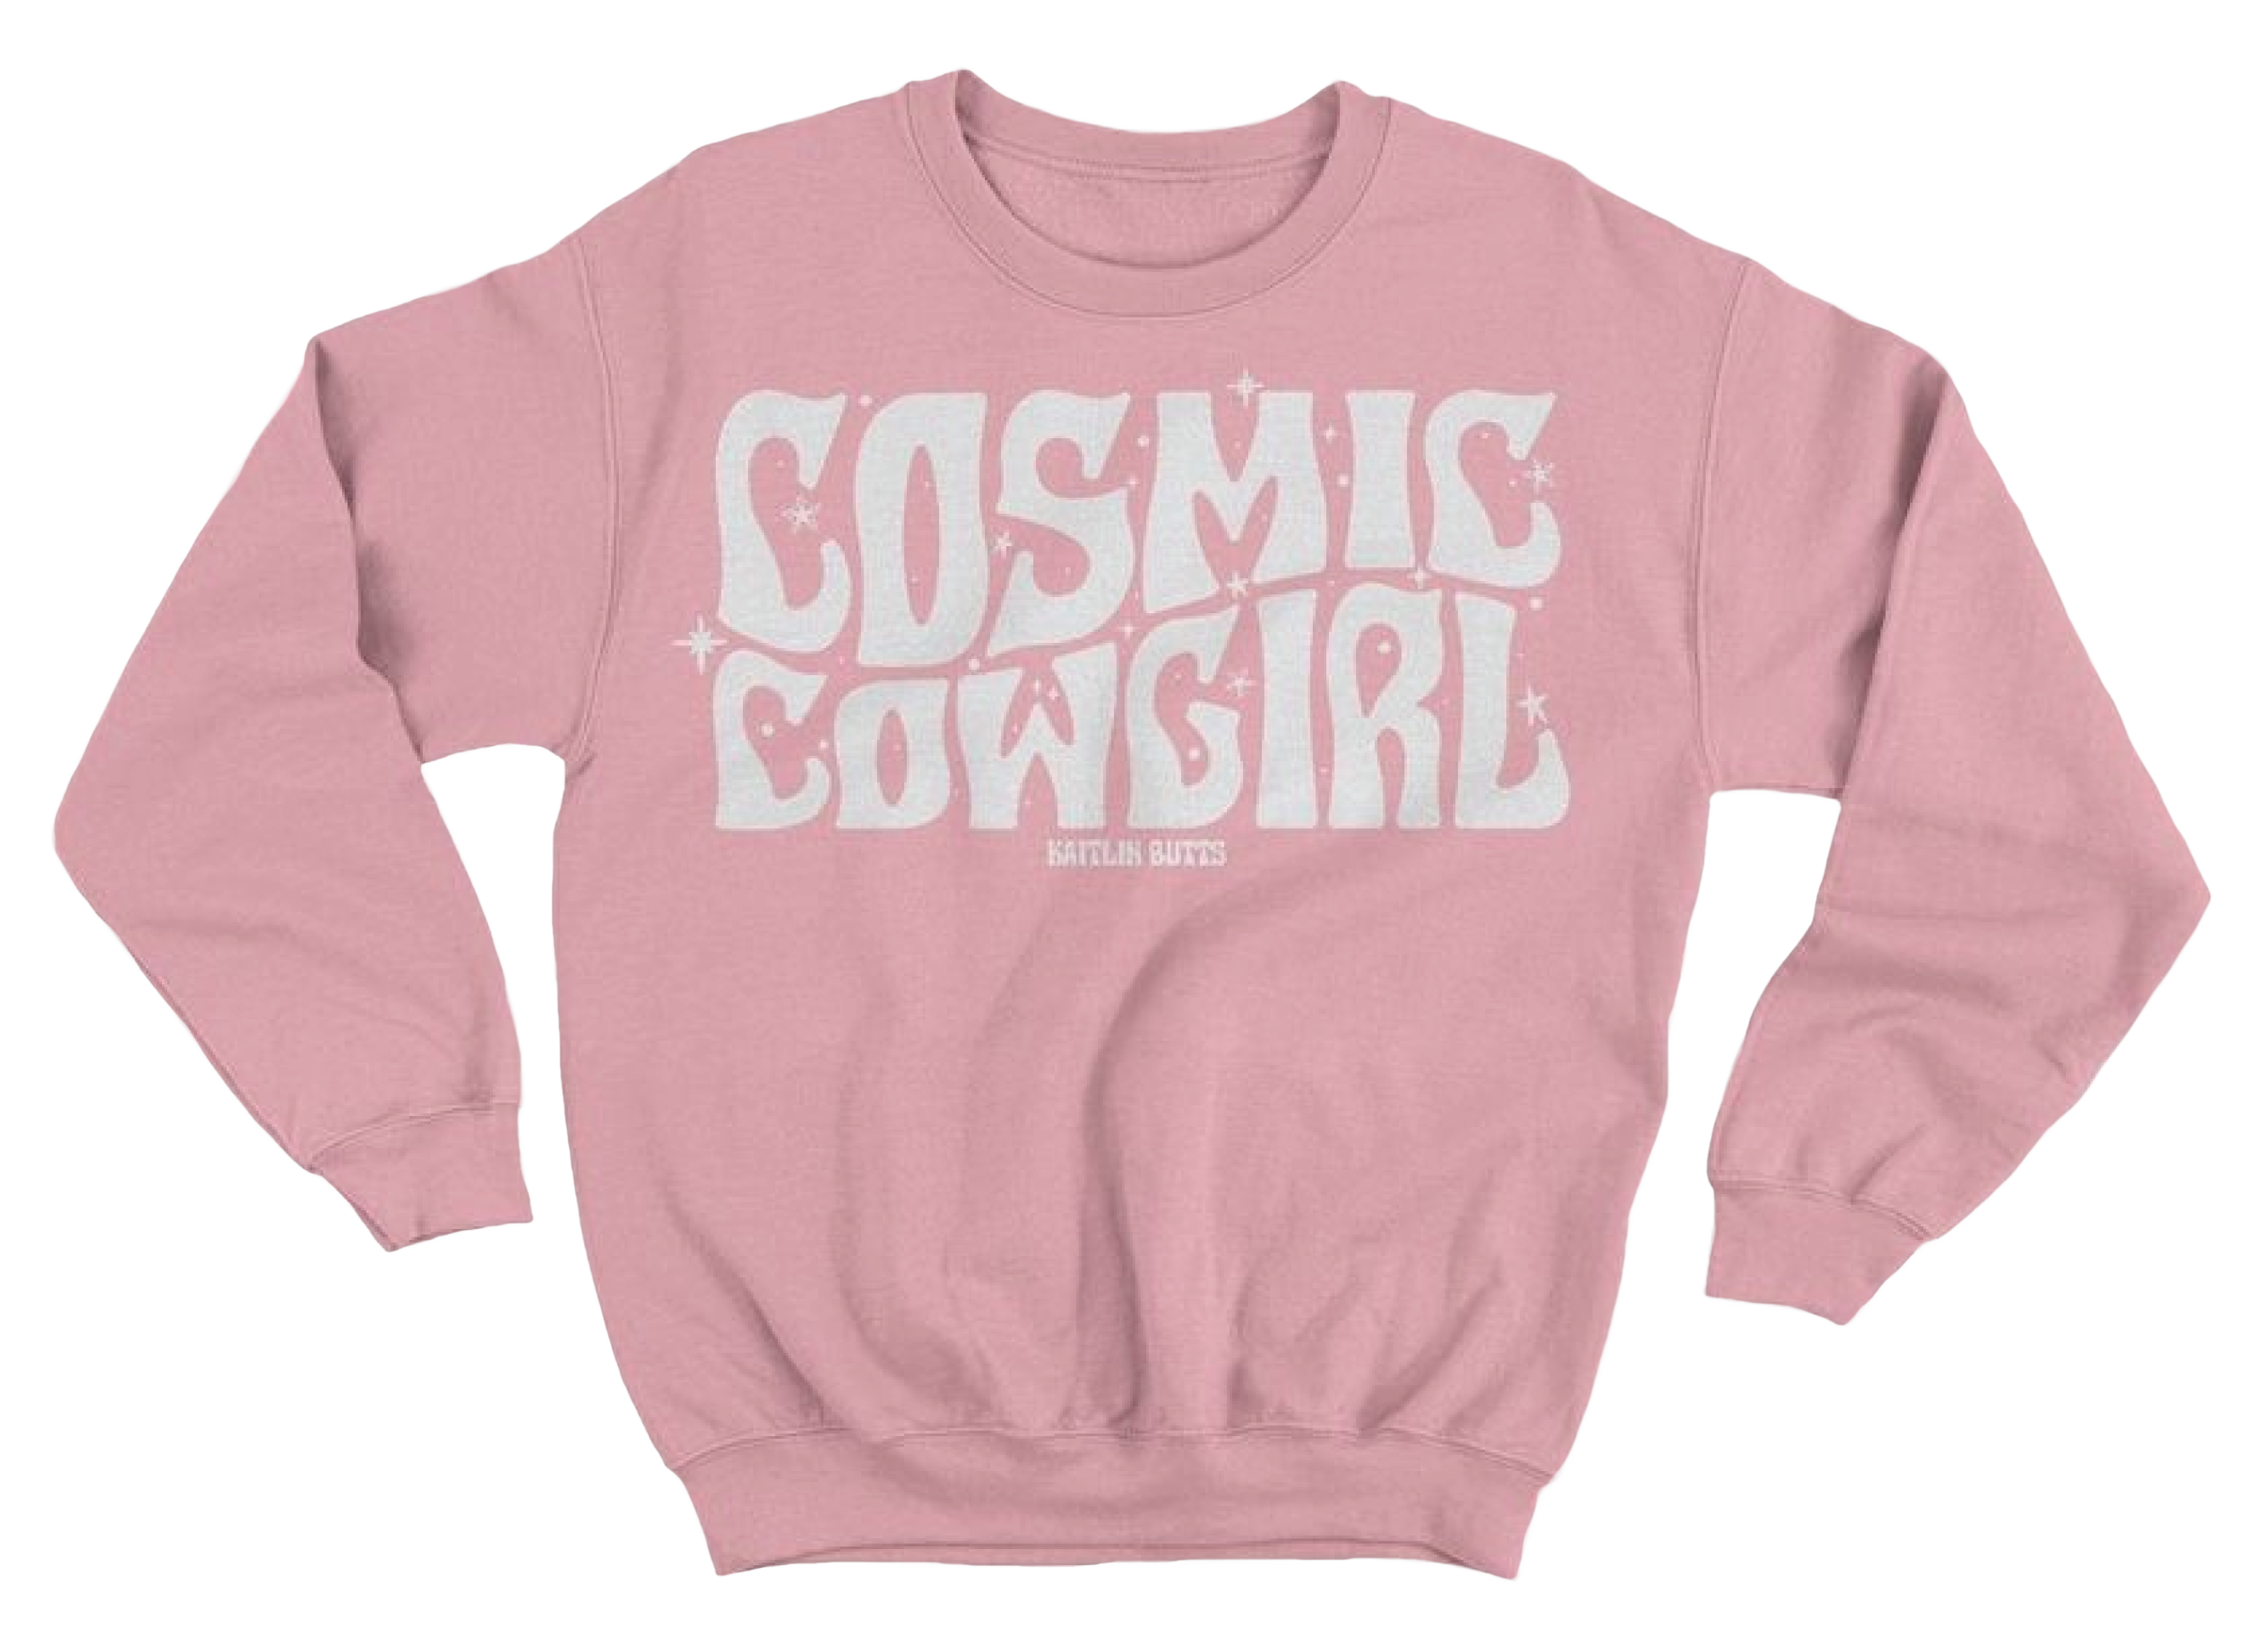 Cosmic Cowgirl Crew Neck Sweater